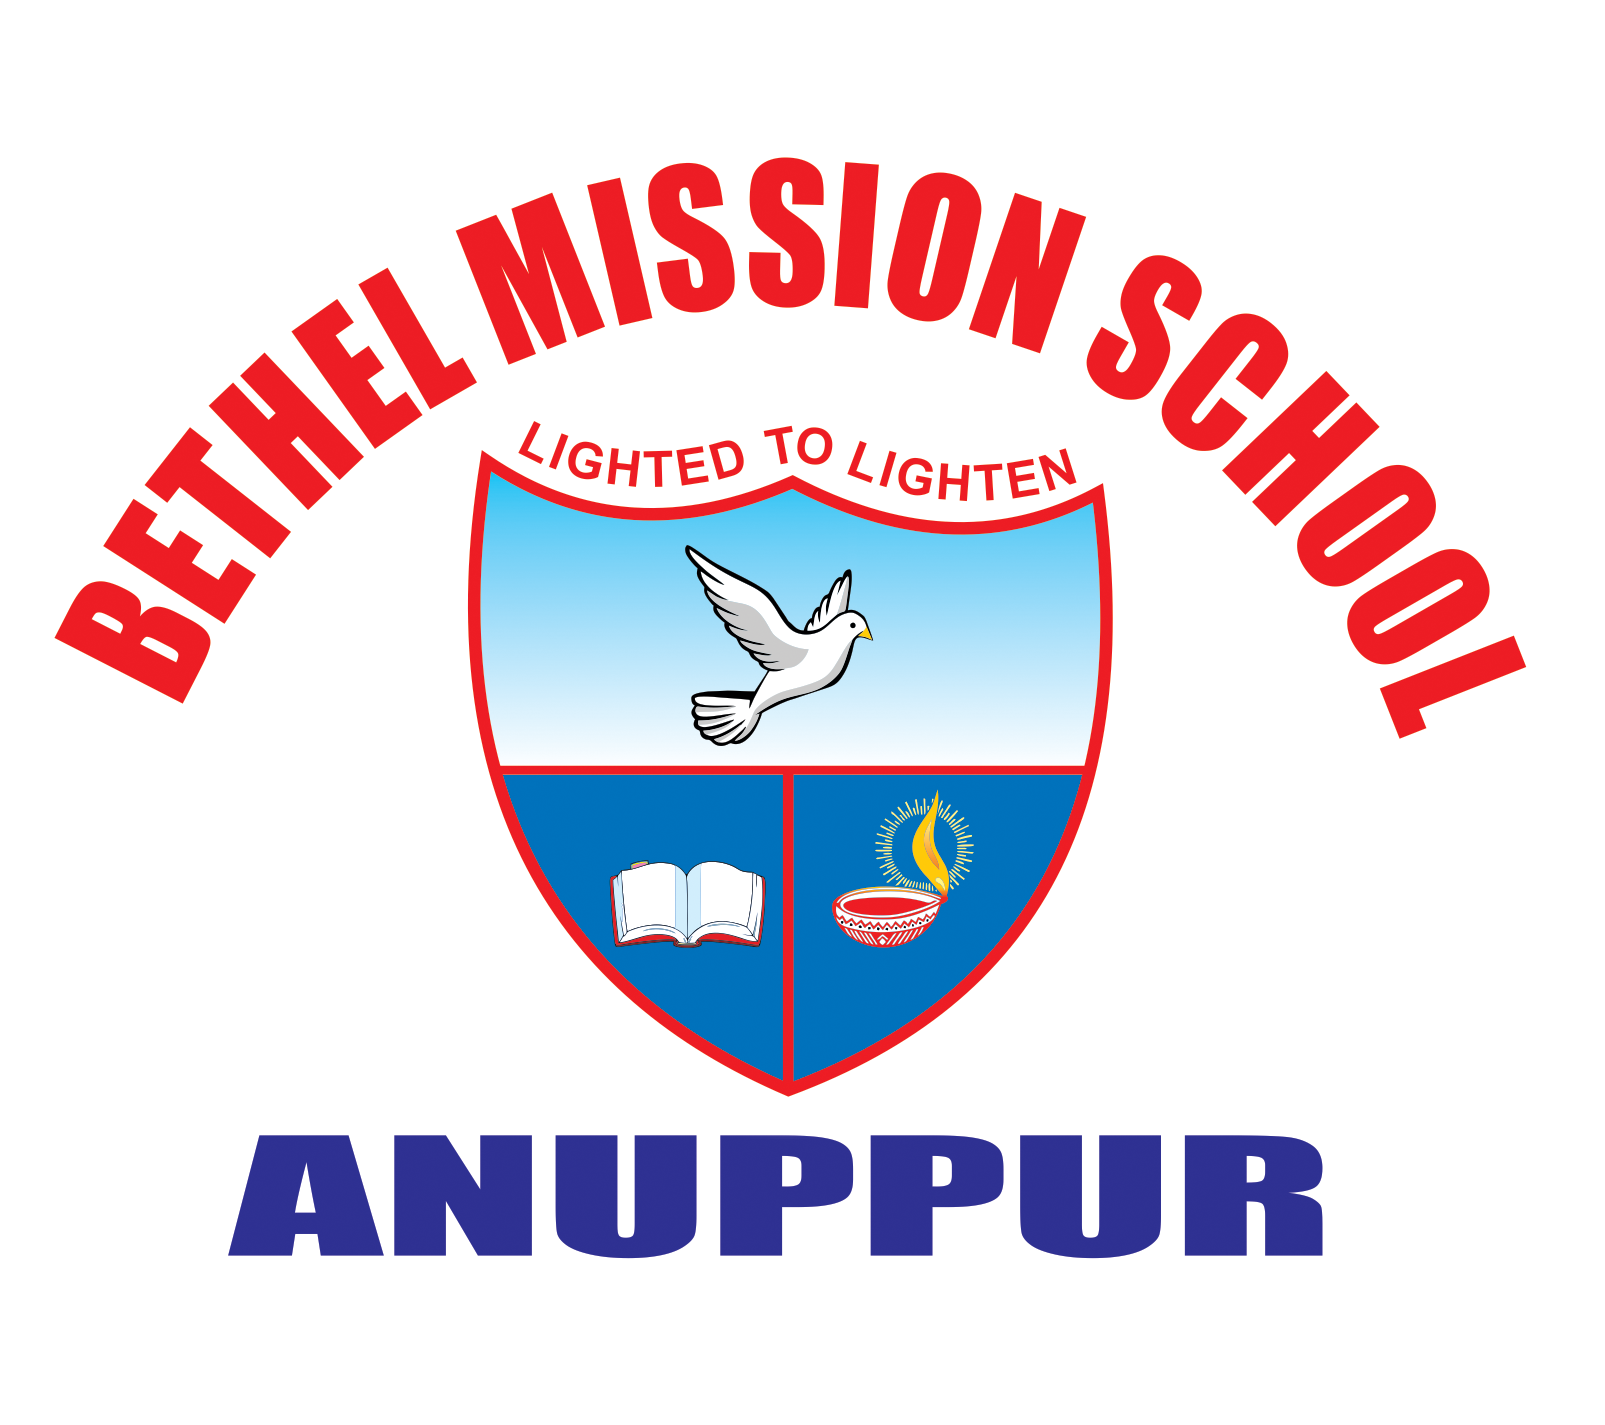 Bethel Mission School|Schools|Education